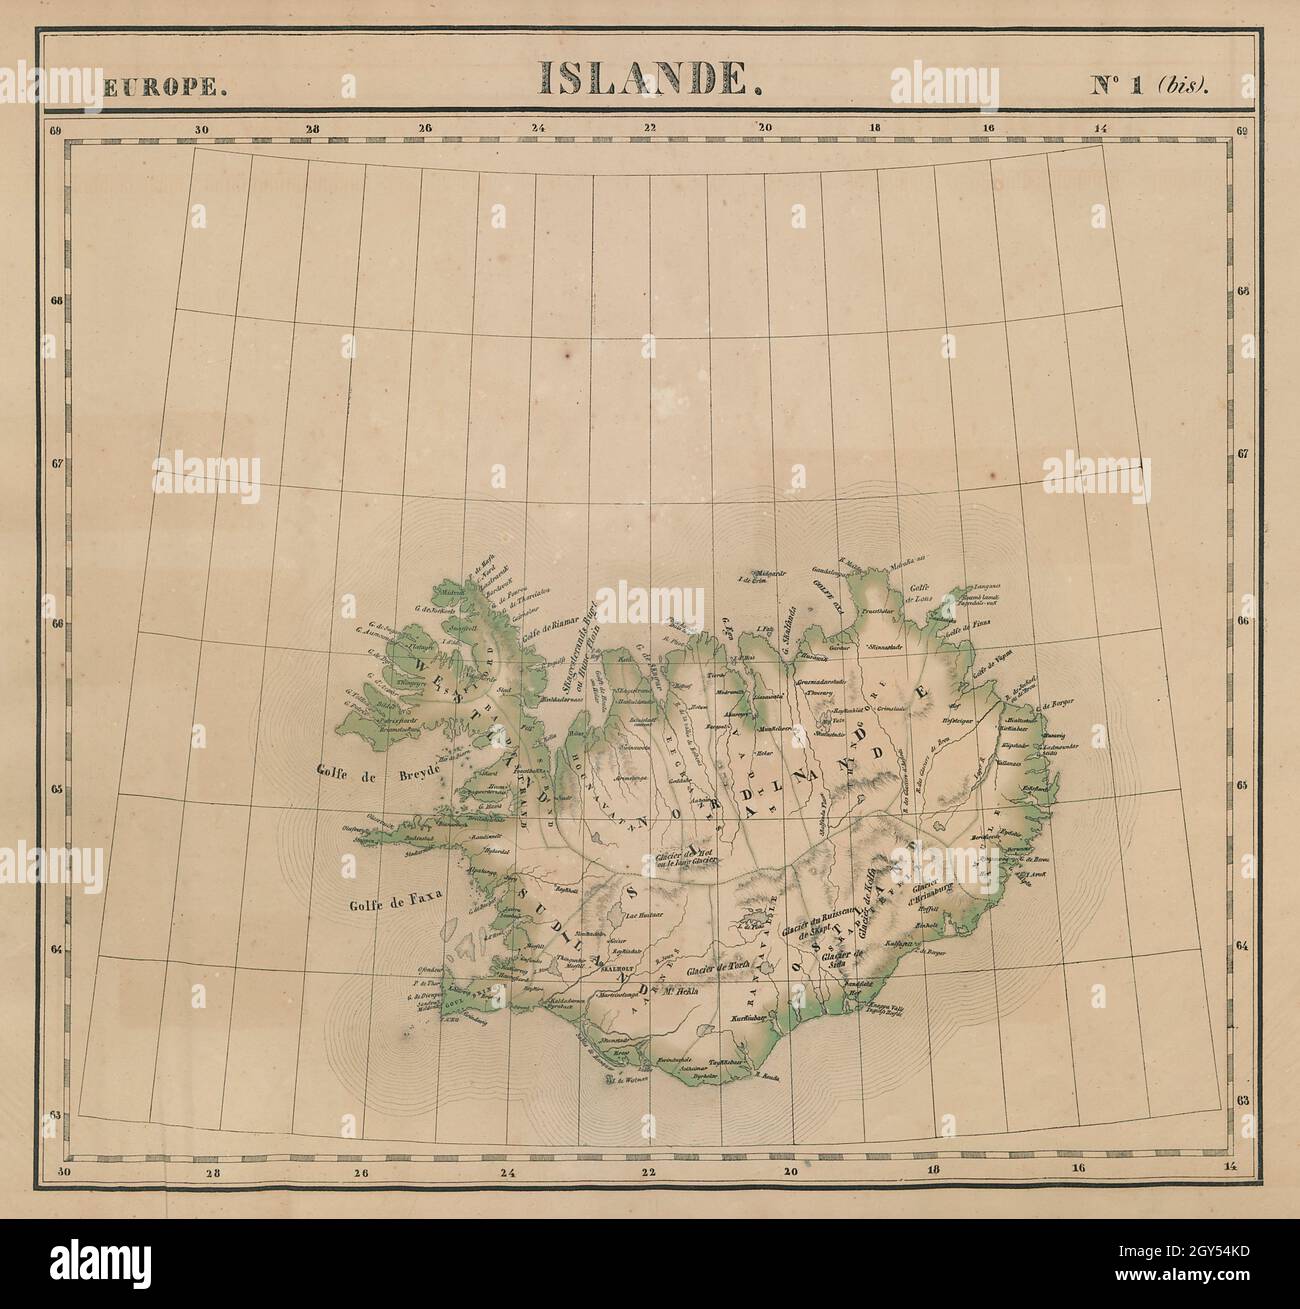 Europe. Islande #1 (bis) Iceland. VANDERMAELEN 1827 old antique map plan chart Stock Photo